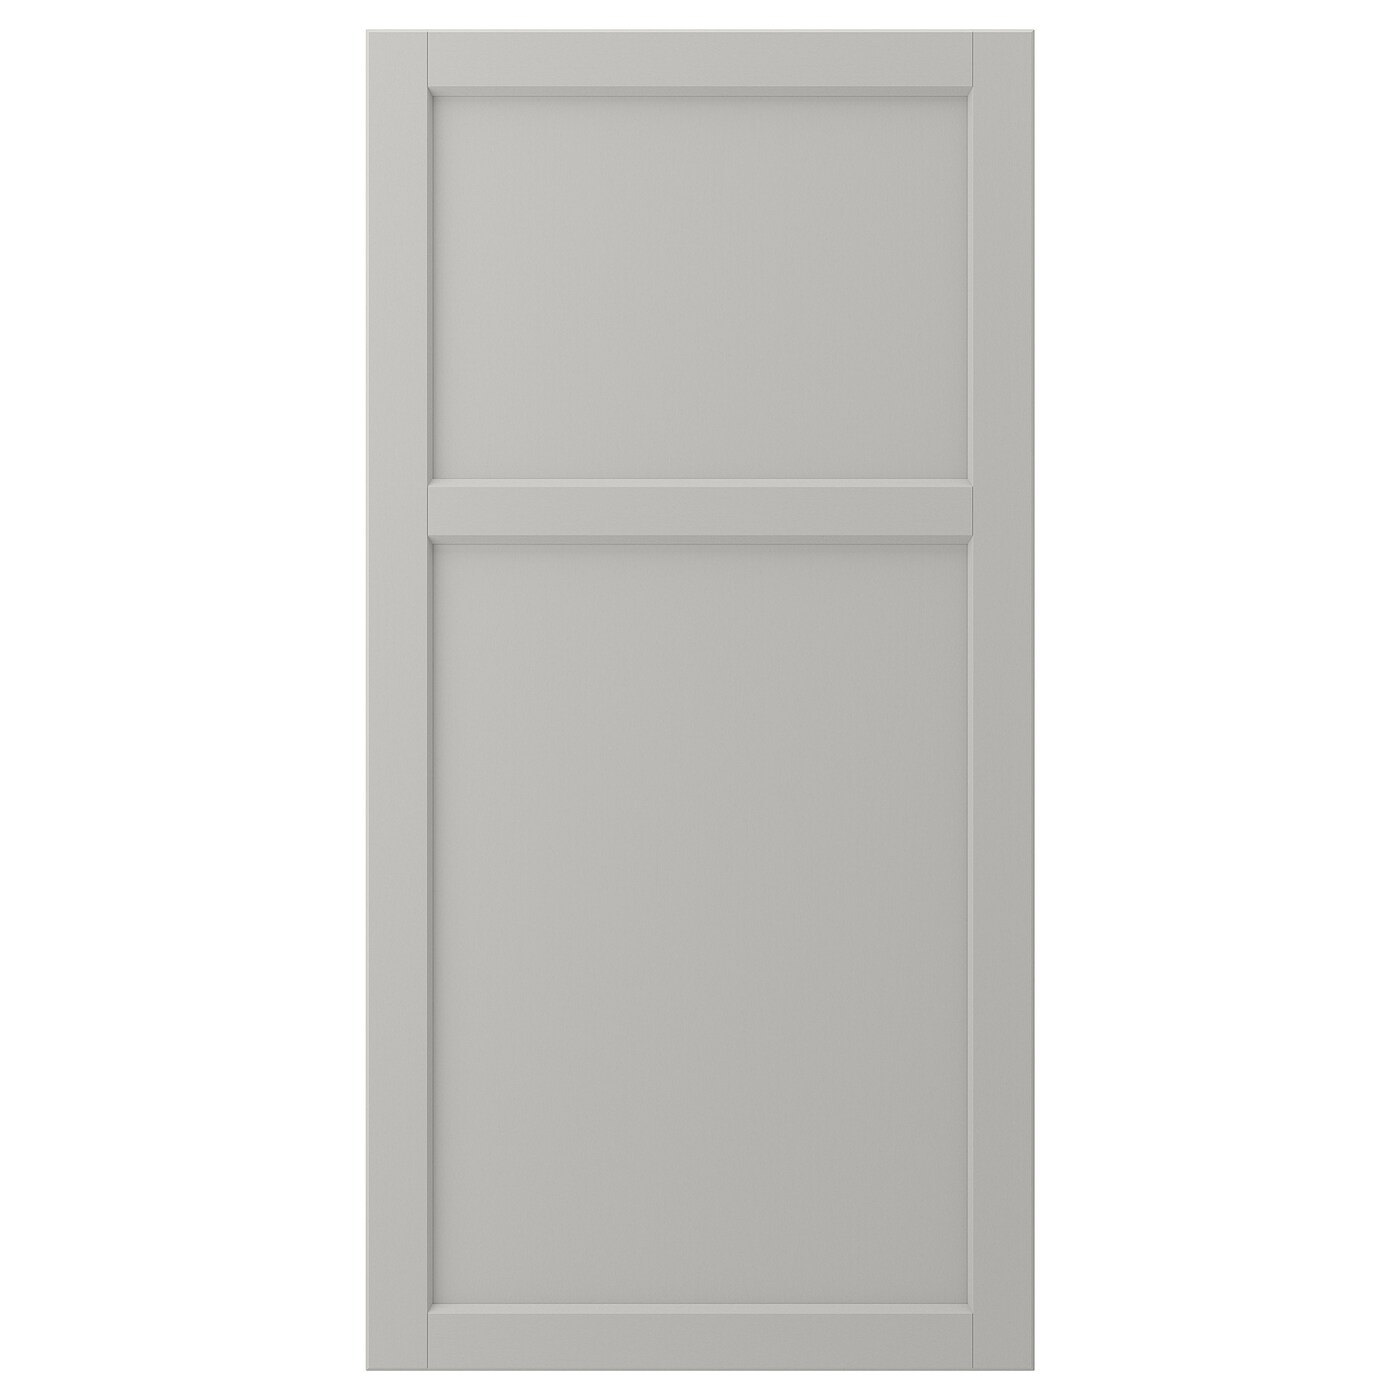 Дверца - IKEA LERHYTTAN, 120х60 см, светло-серый, ЛЕРХЮТТАН ИКЕА